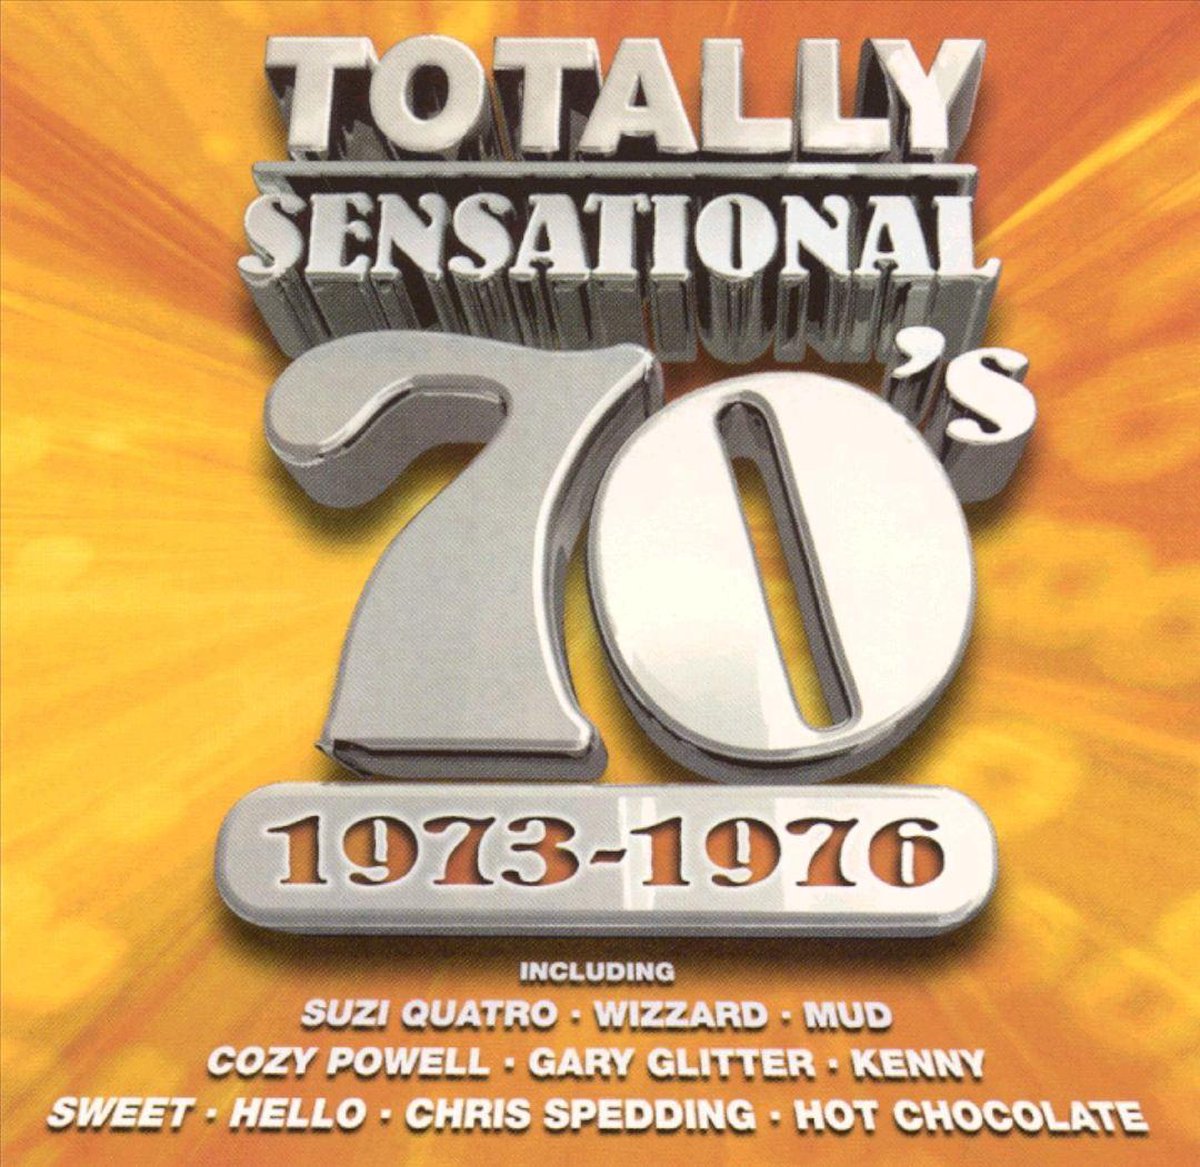 Totally Sensational 70's: 1973-1976 - various artists